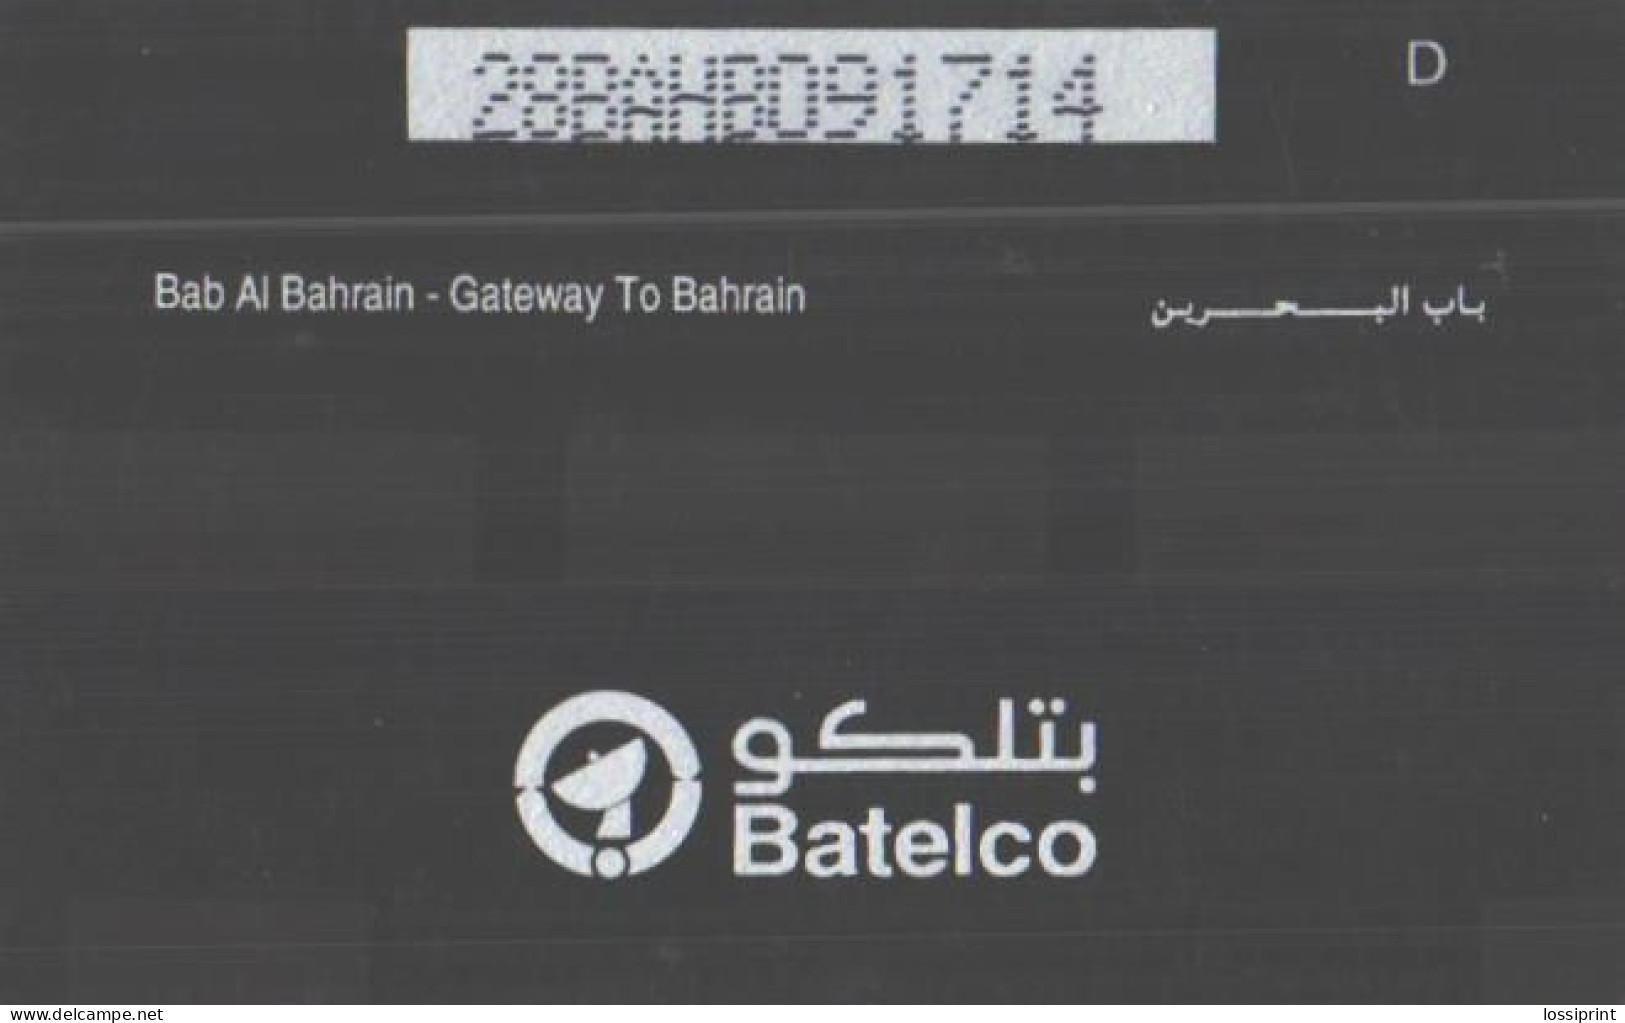 Bahrain:Used Phonecard, Batelco, 25 Units, Bab Al Bahrain - Gateway To Bahrain - Pakistan